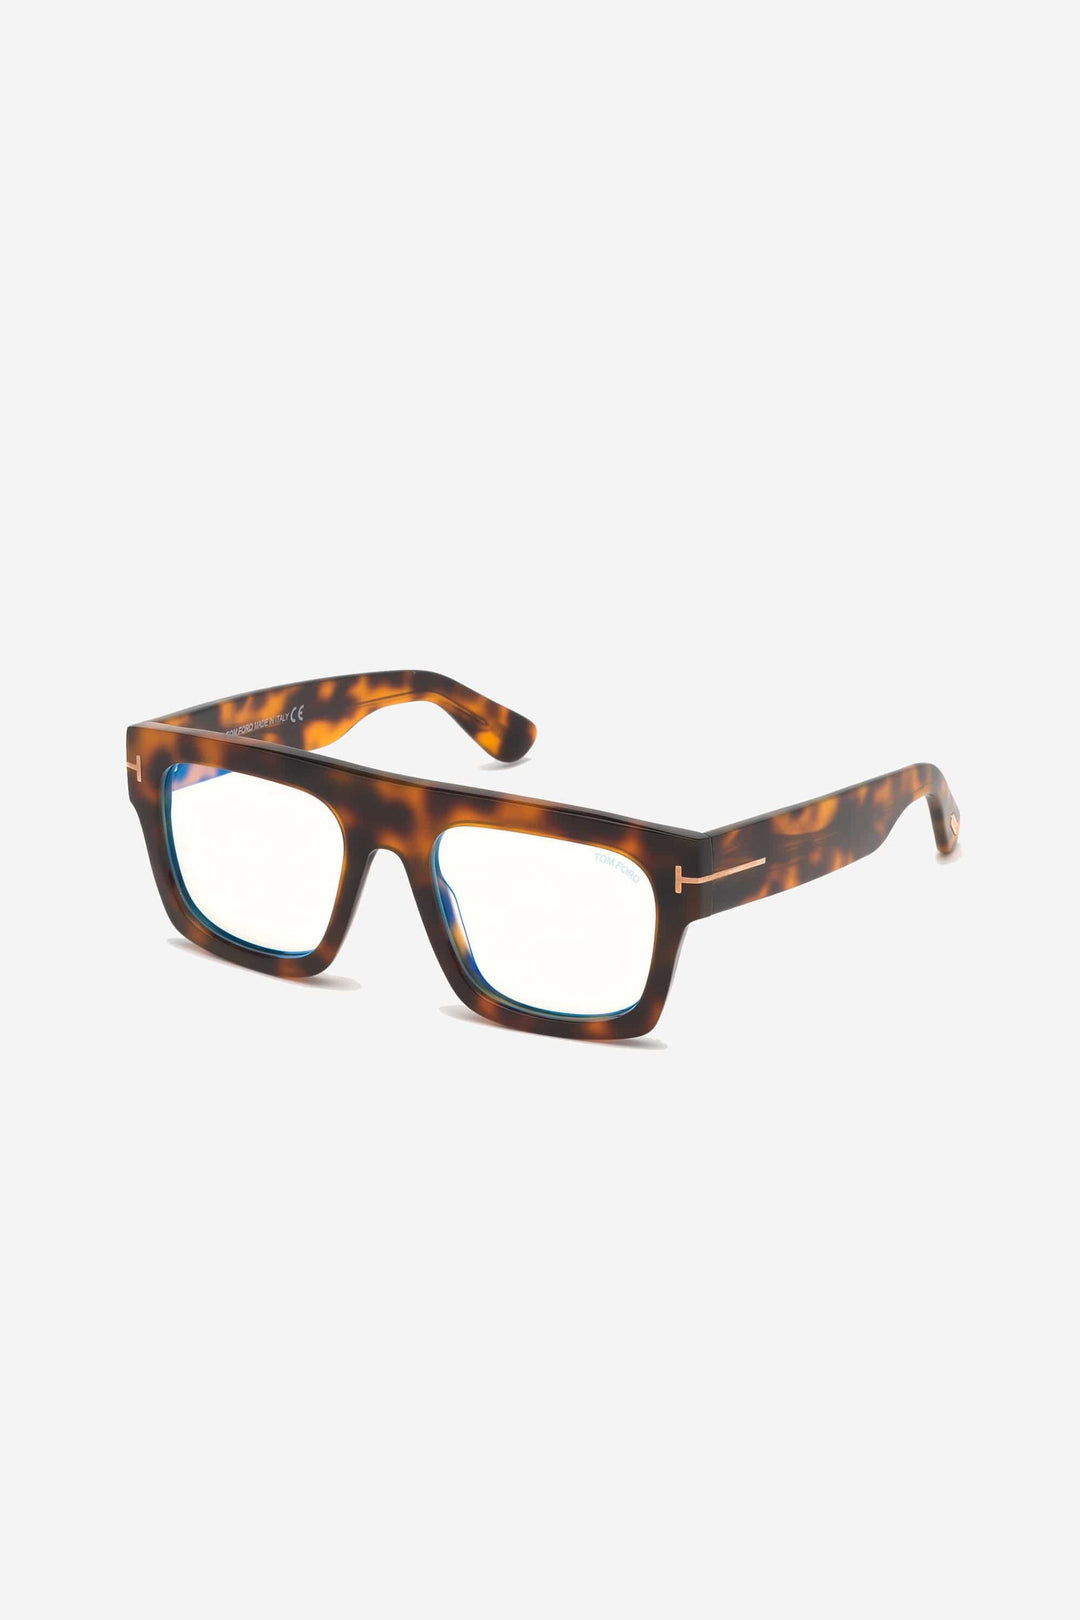 Tom Ford havana squared glasses - Eyewear Club